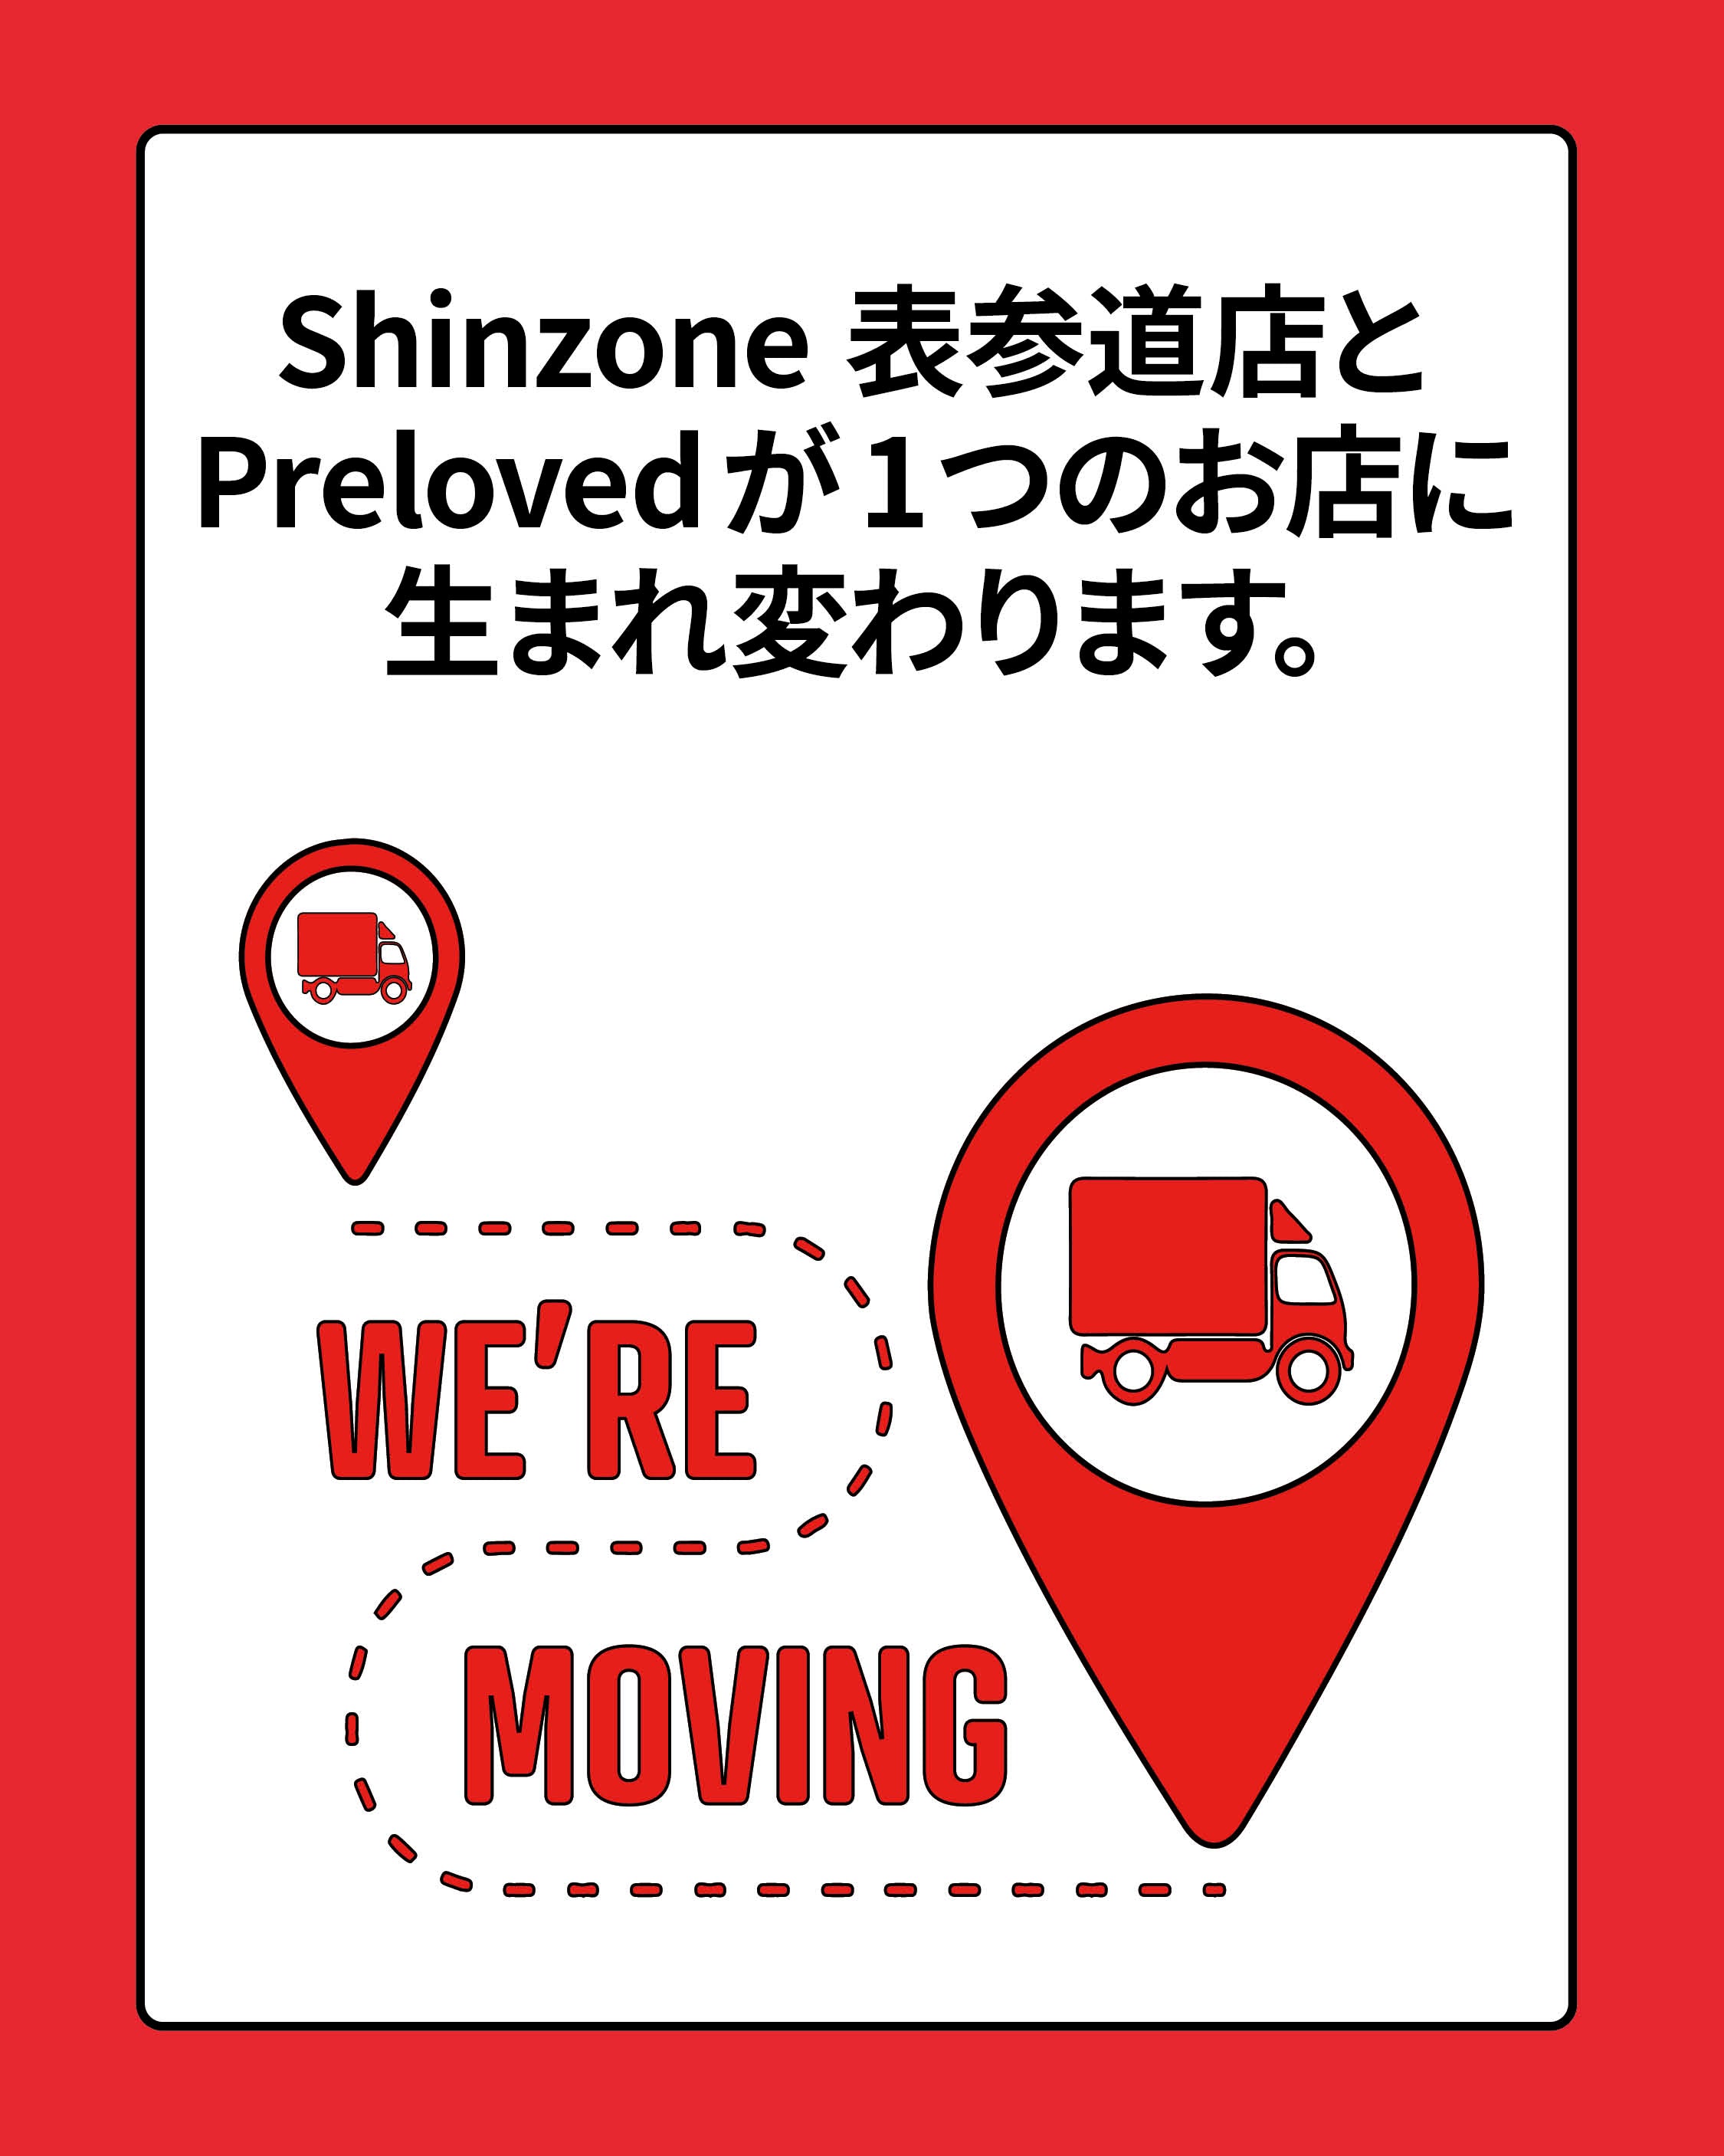 COMING SOON ! NEW Shinzone OMOTESANDO & Preloved